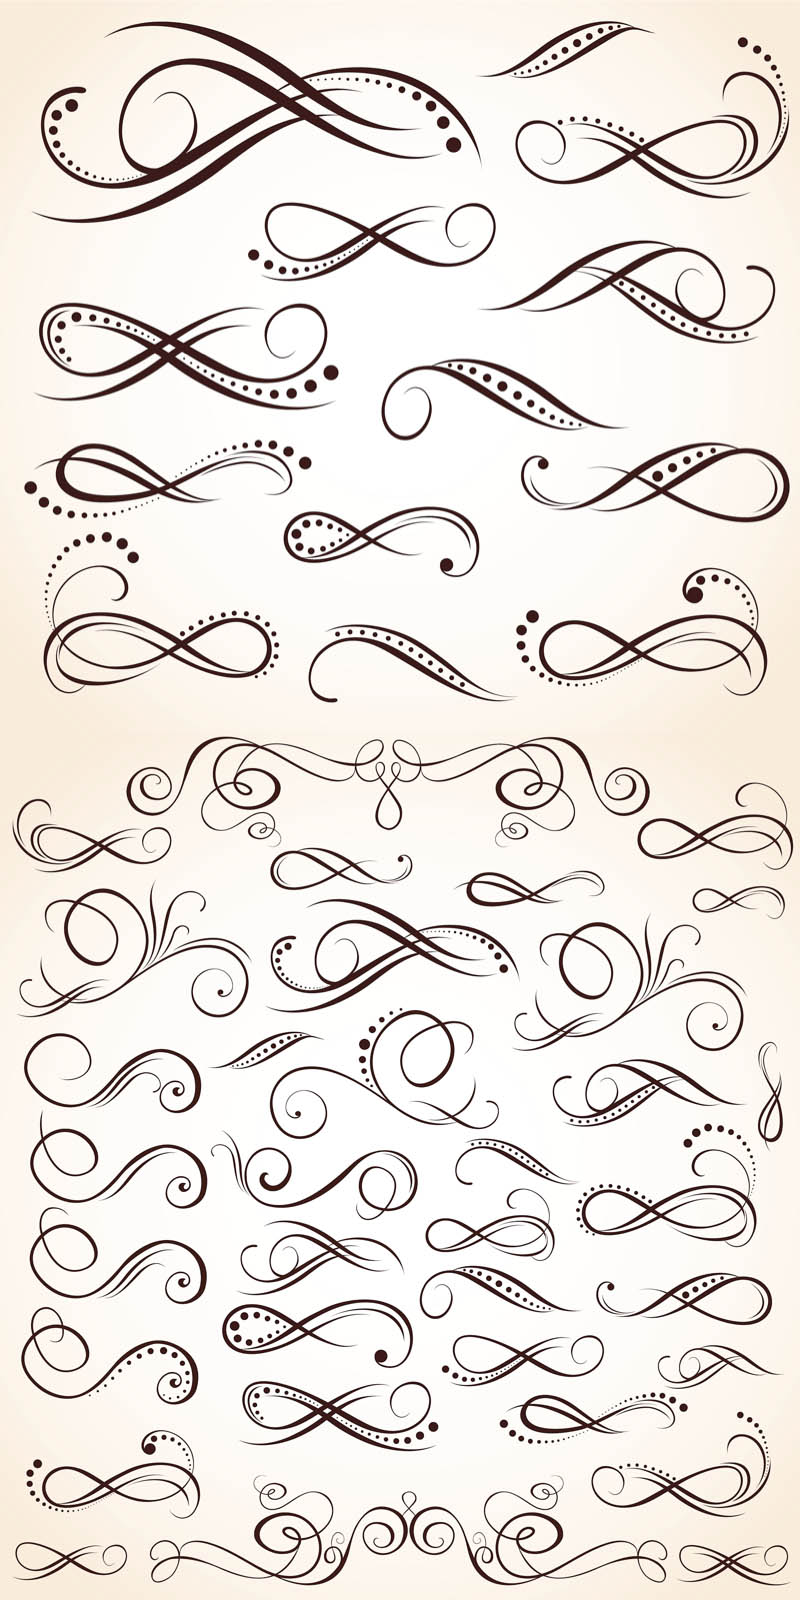 15 Ornate Swirls Vector Free Images